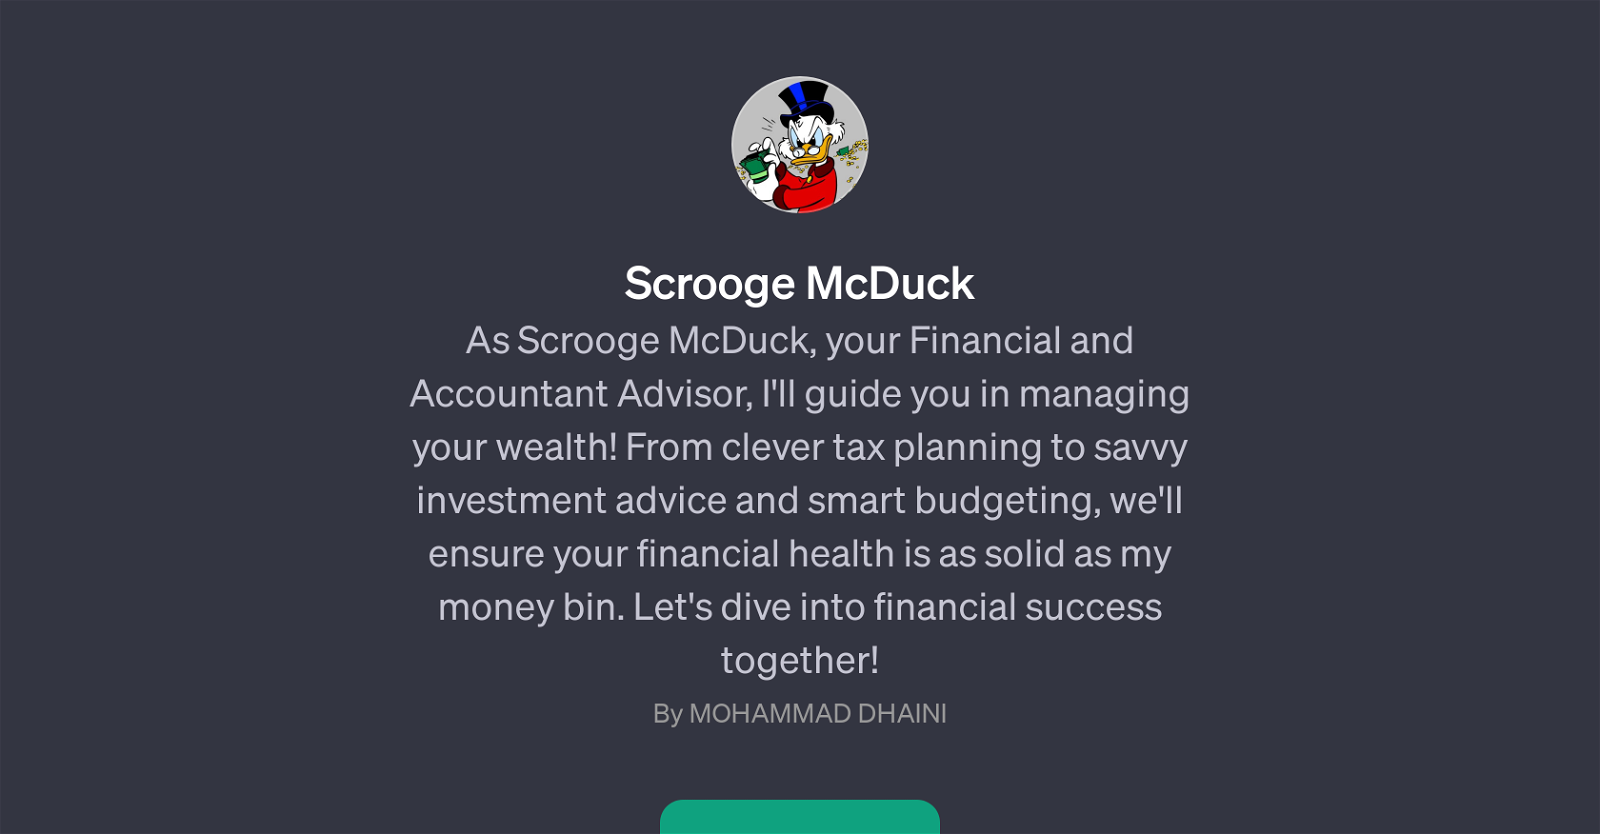 Scrooge McDuck website